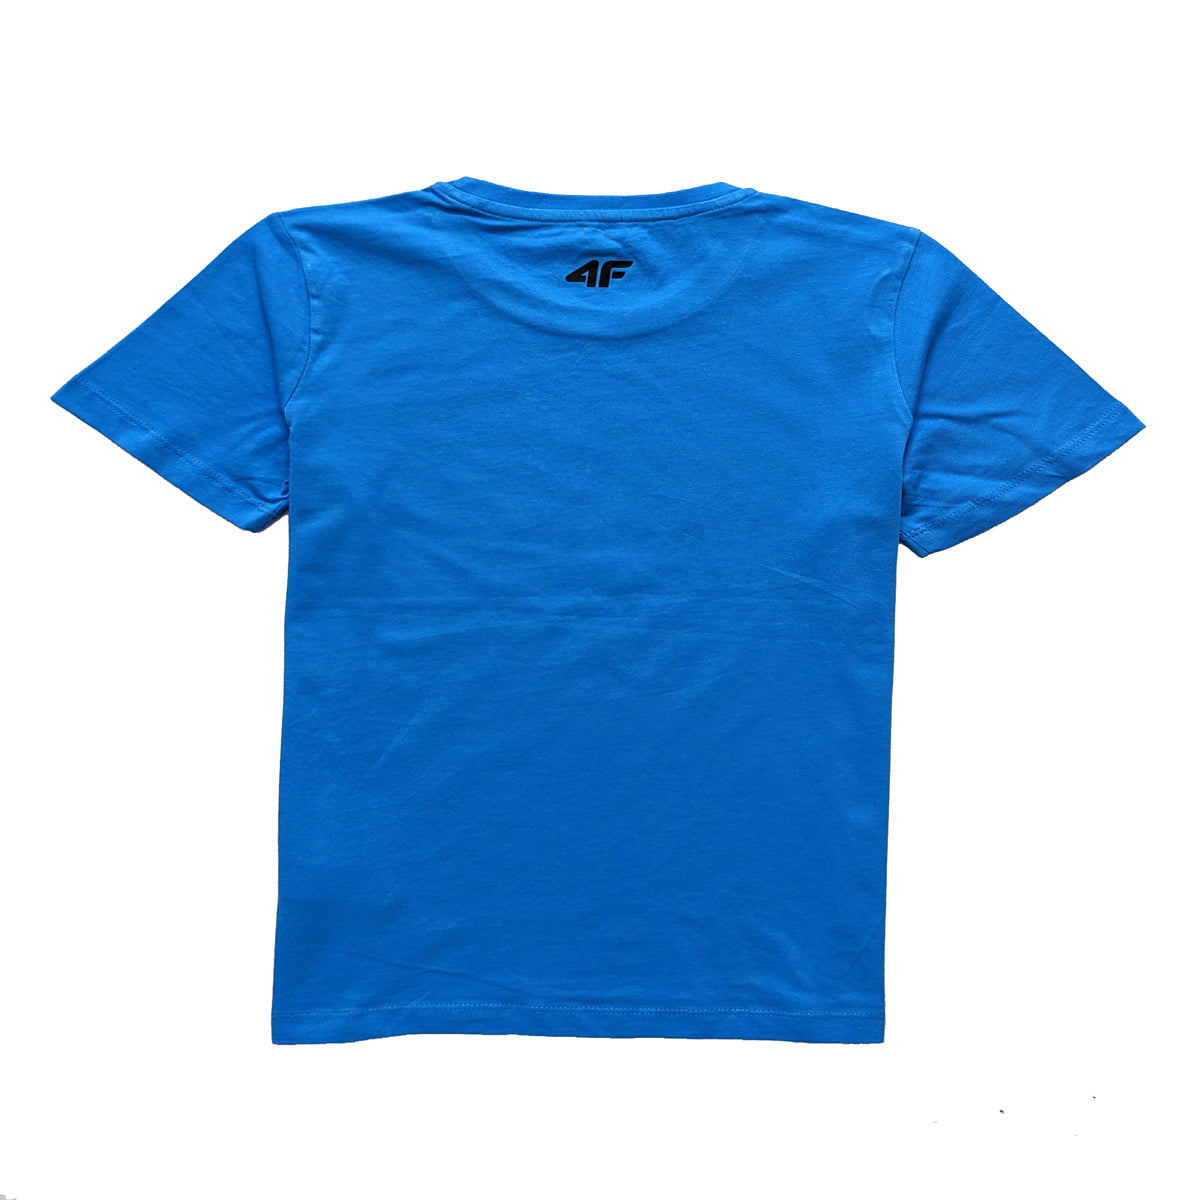 Boys Sporty Blue T-Shirt with Bold 4F Logo Print